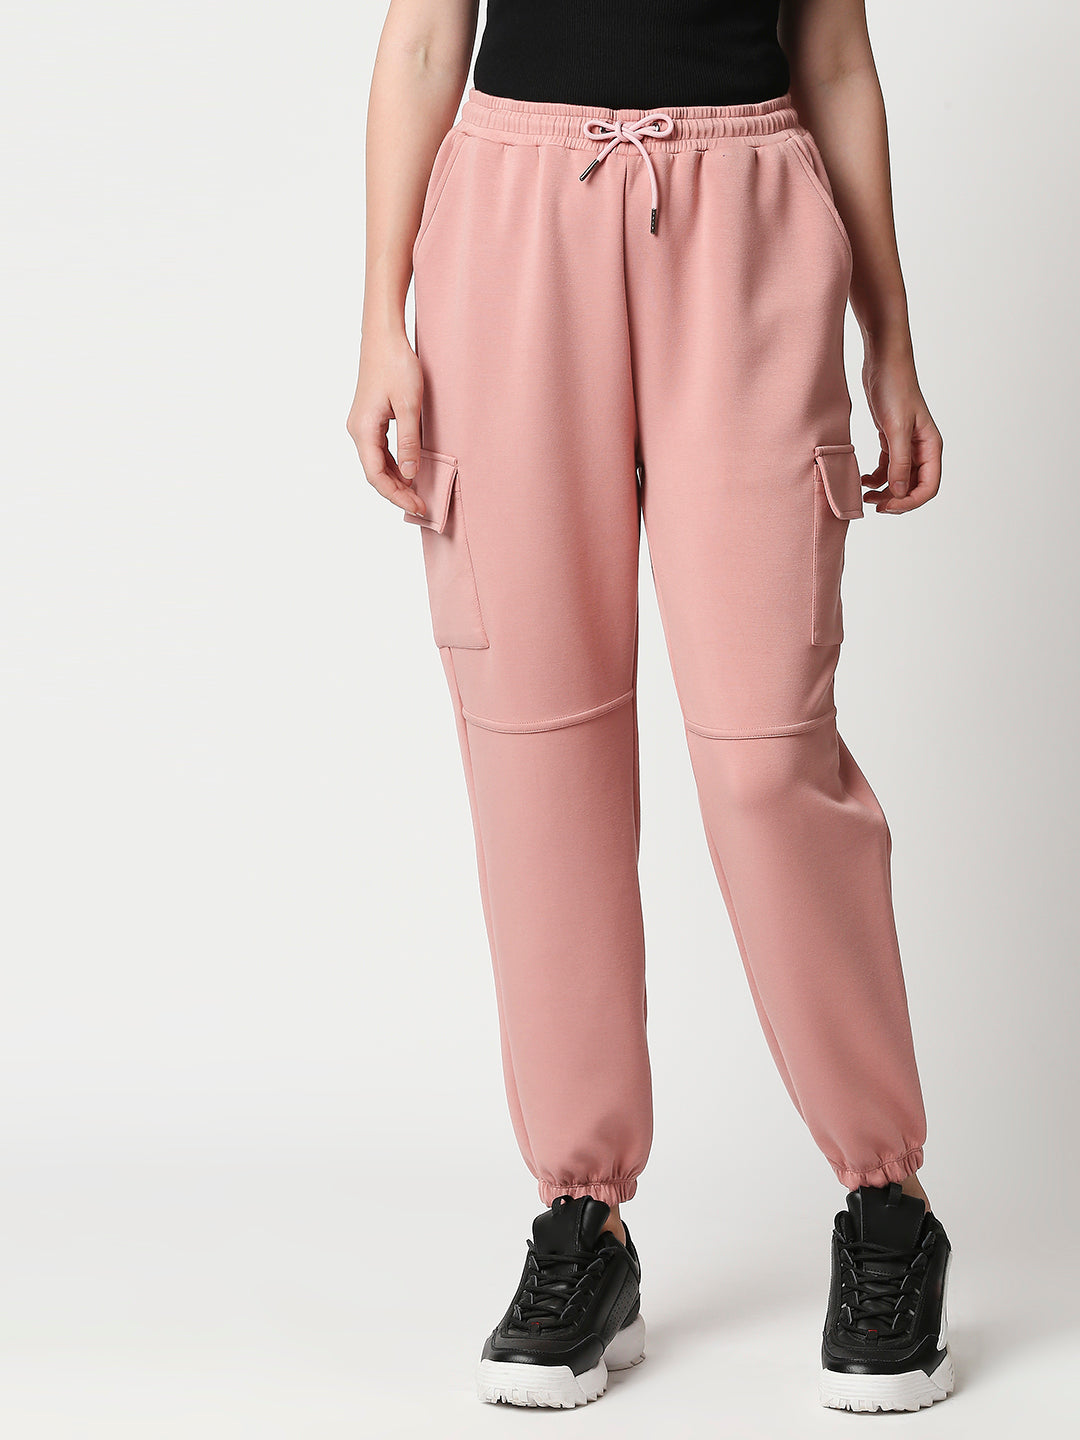 Buy Women's Pink Comfort Fit Scuba Fabric Joggers.